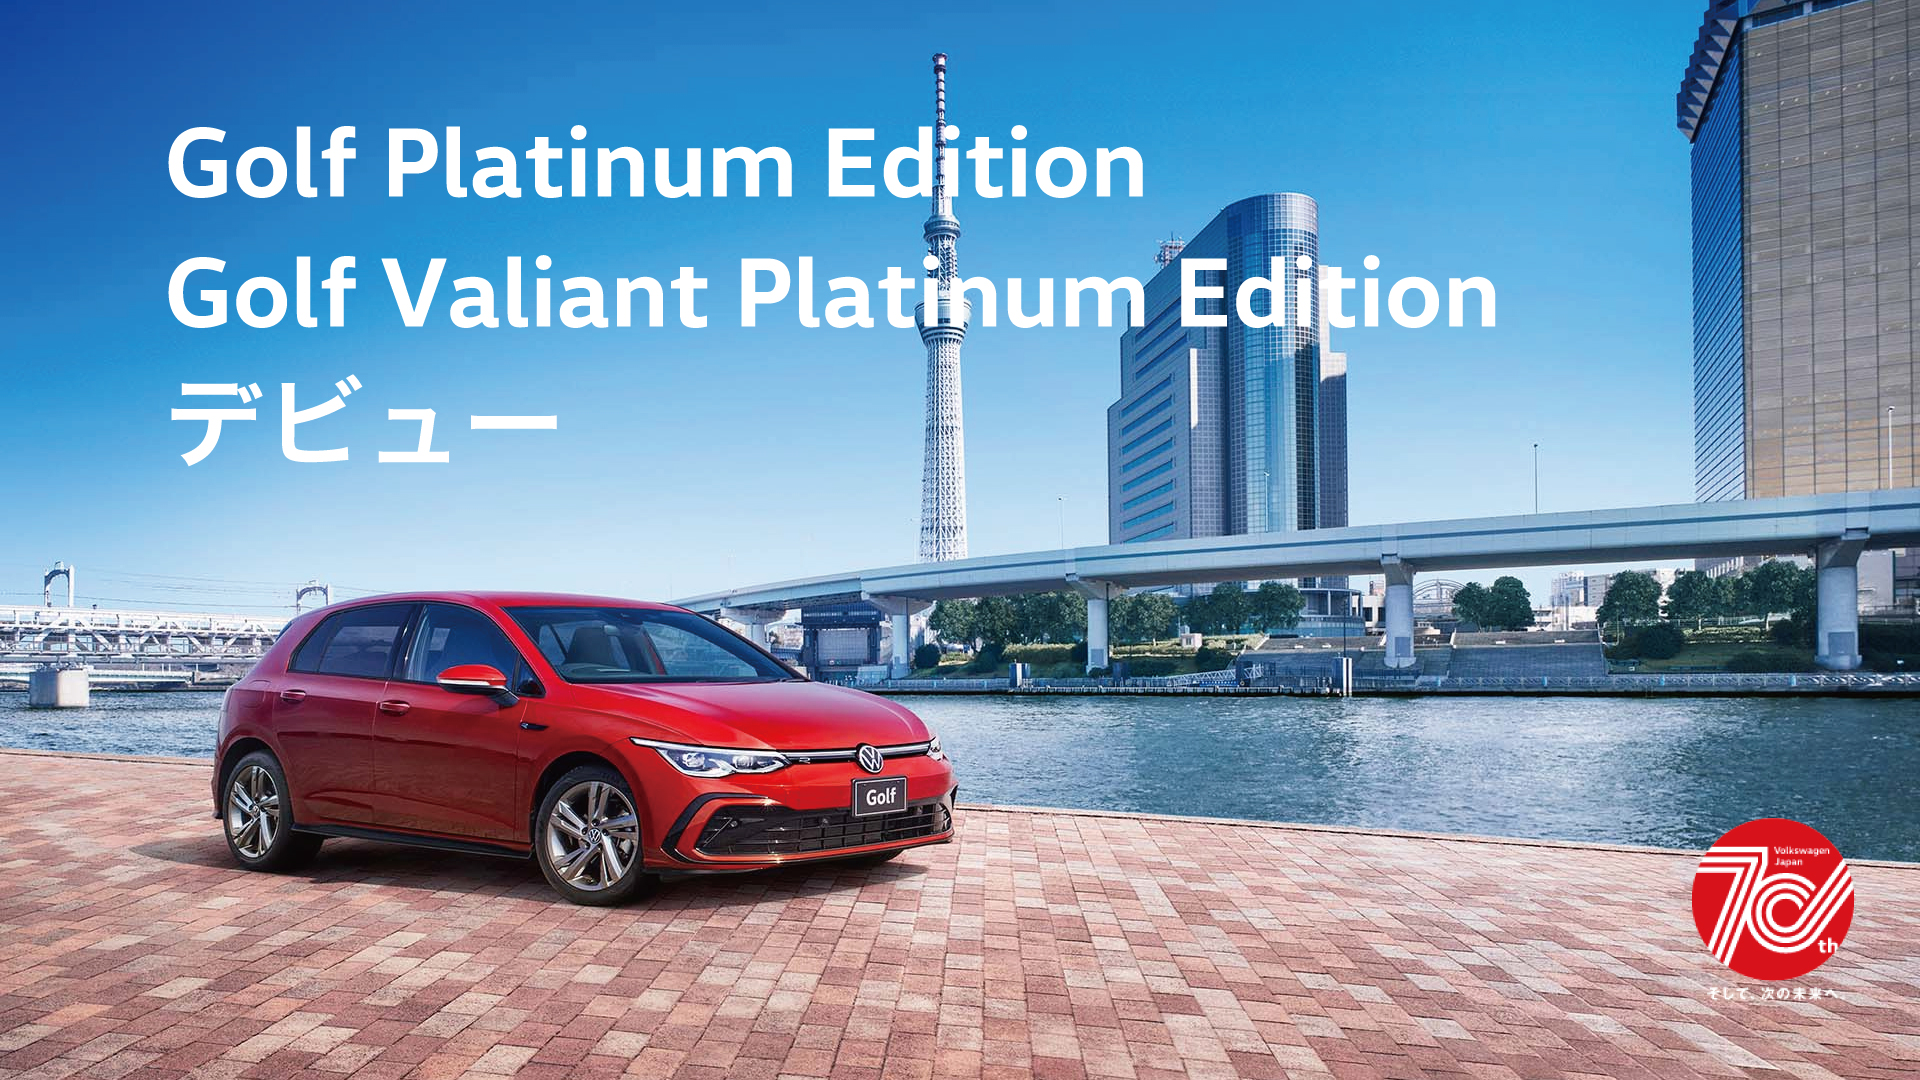 Golf Platinum Edition,Golf Valiant Platinum Edition,デビュー